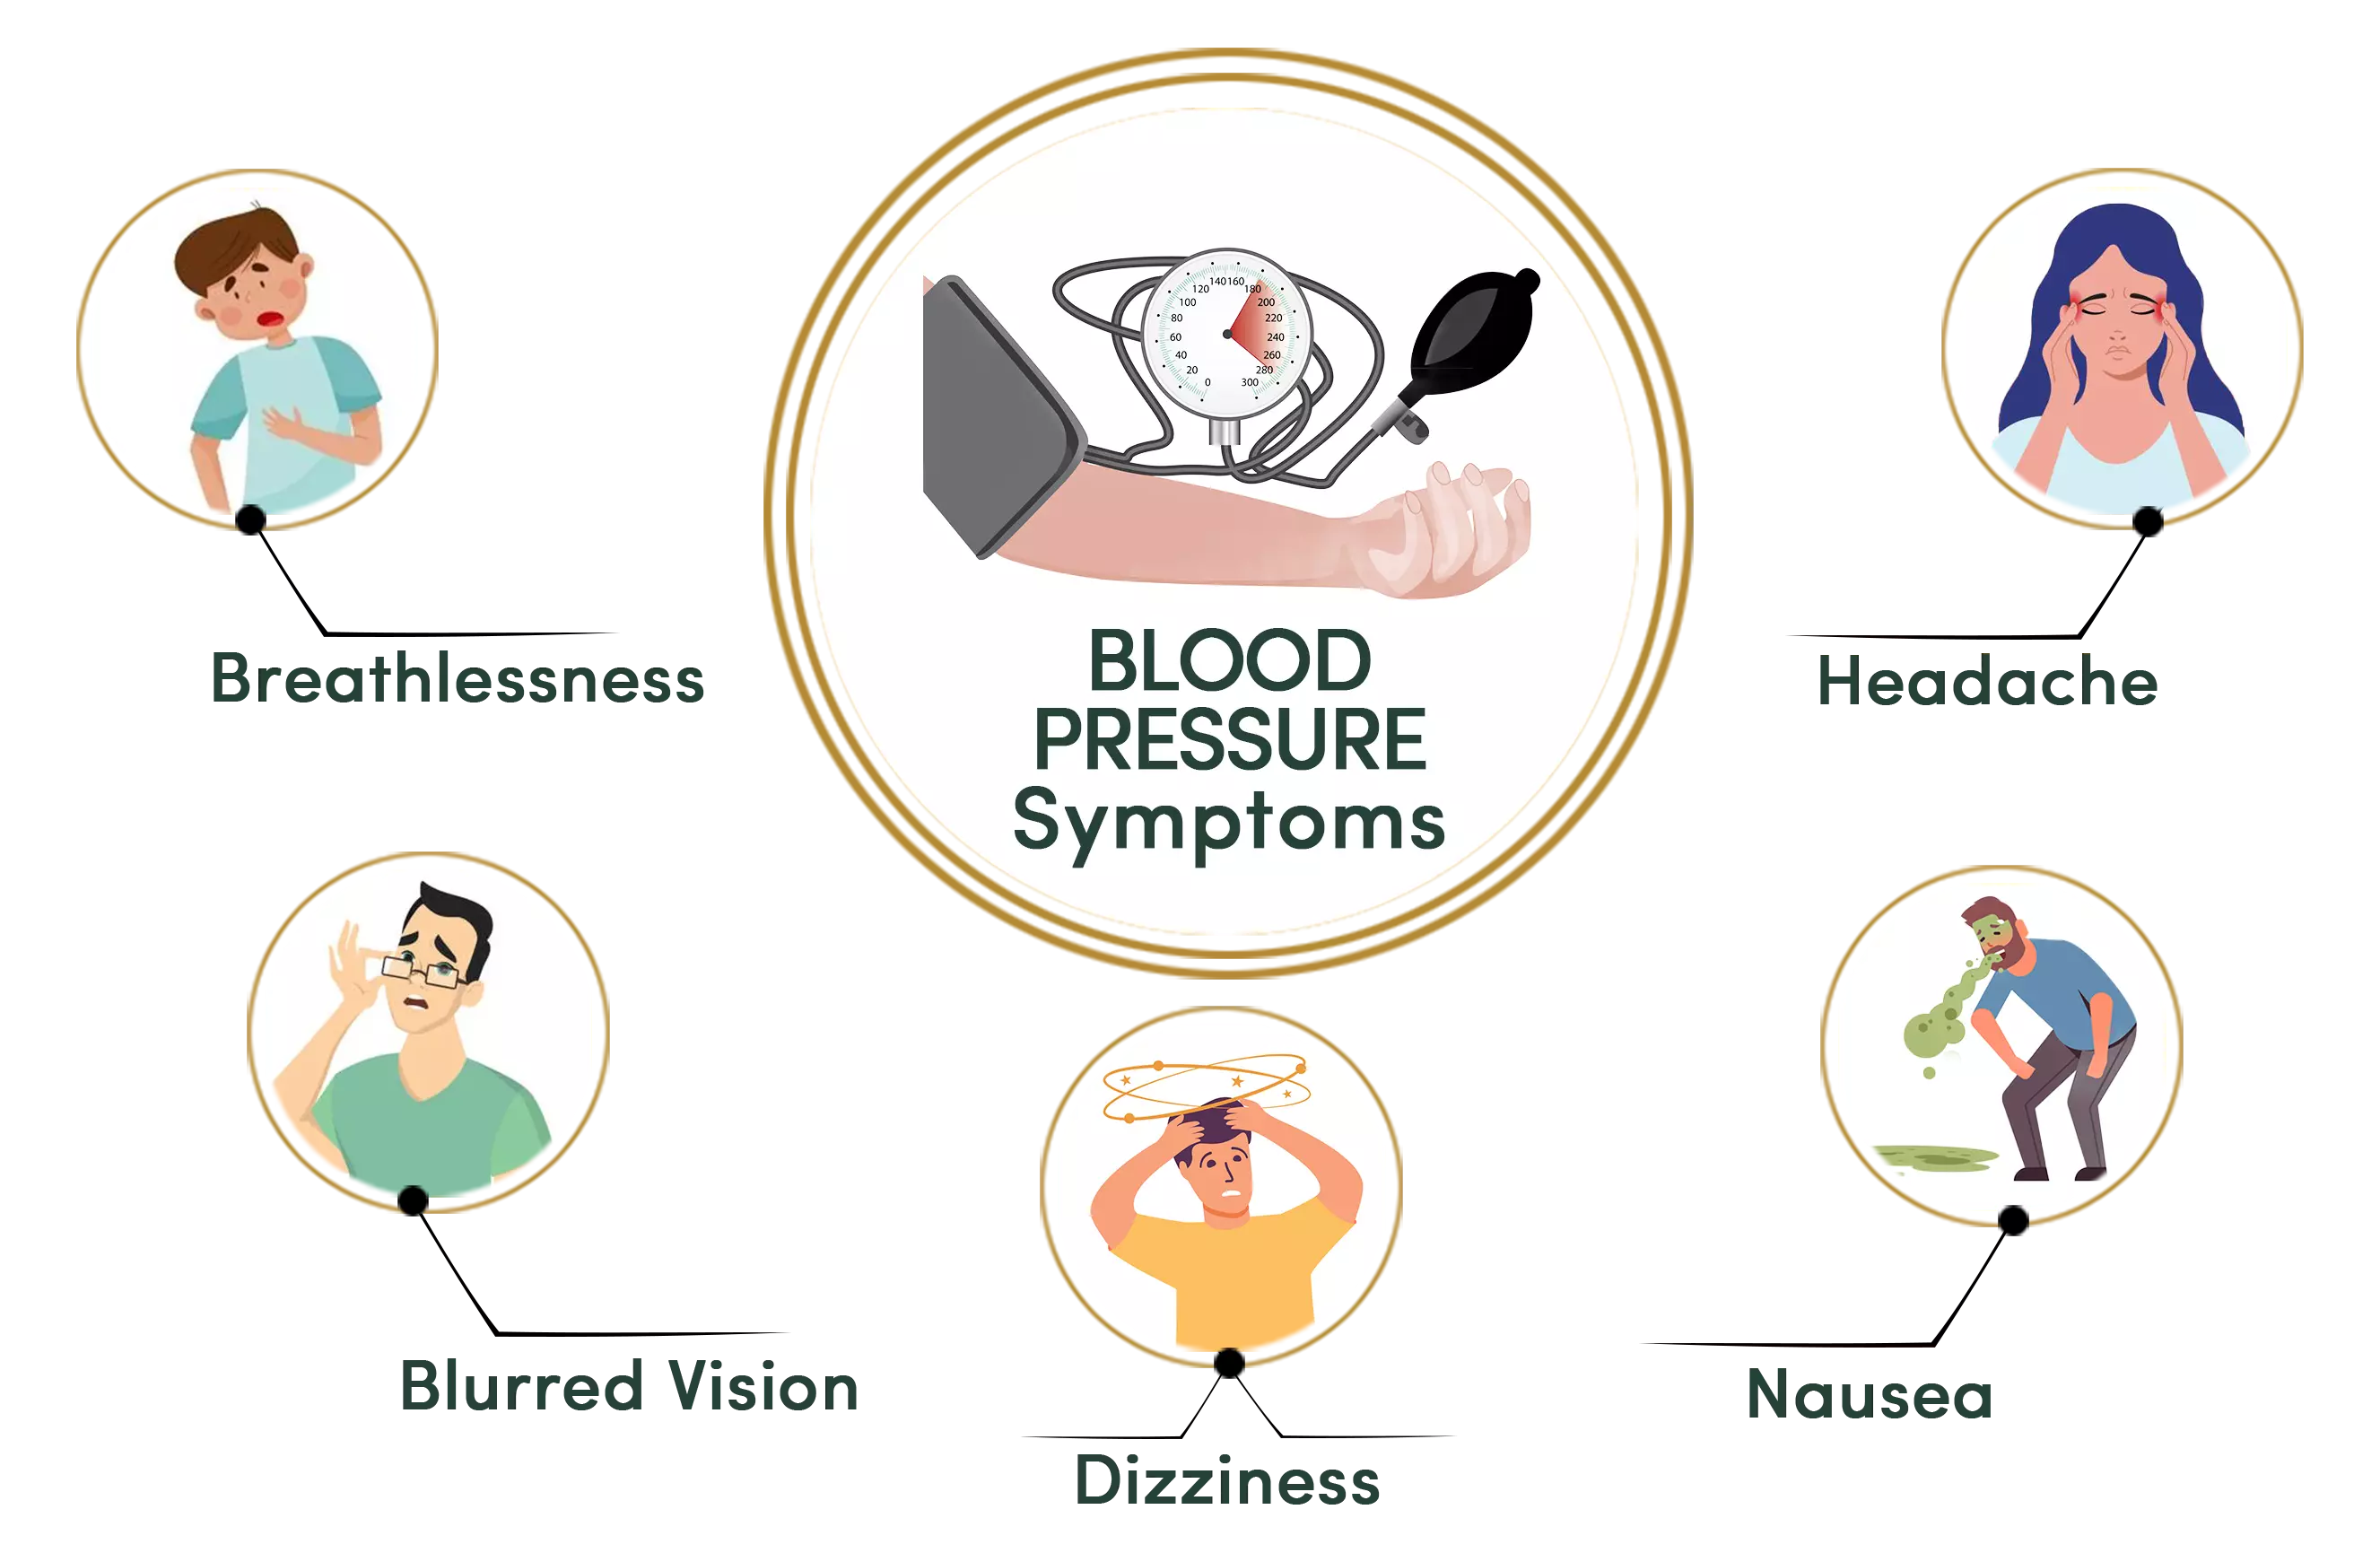 Symptoms of Blood Pressure